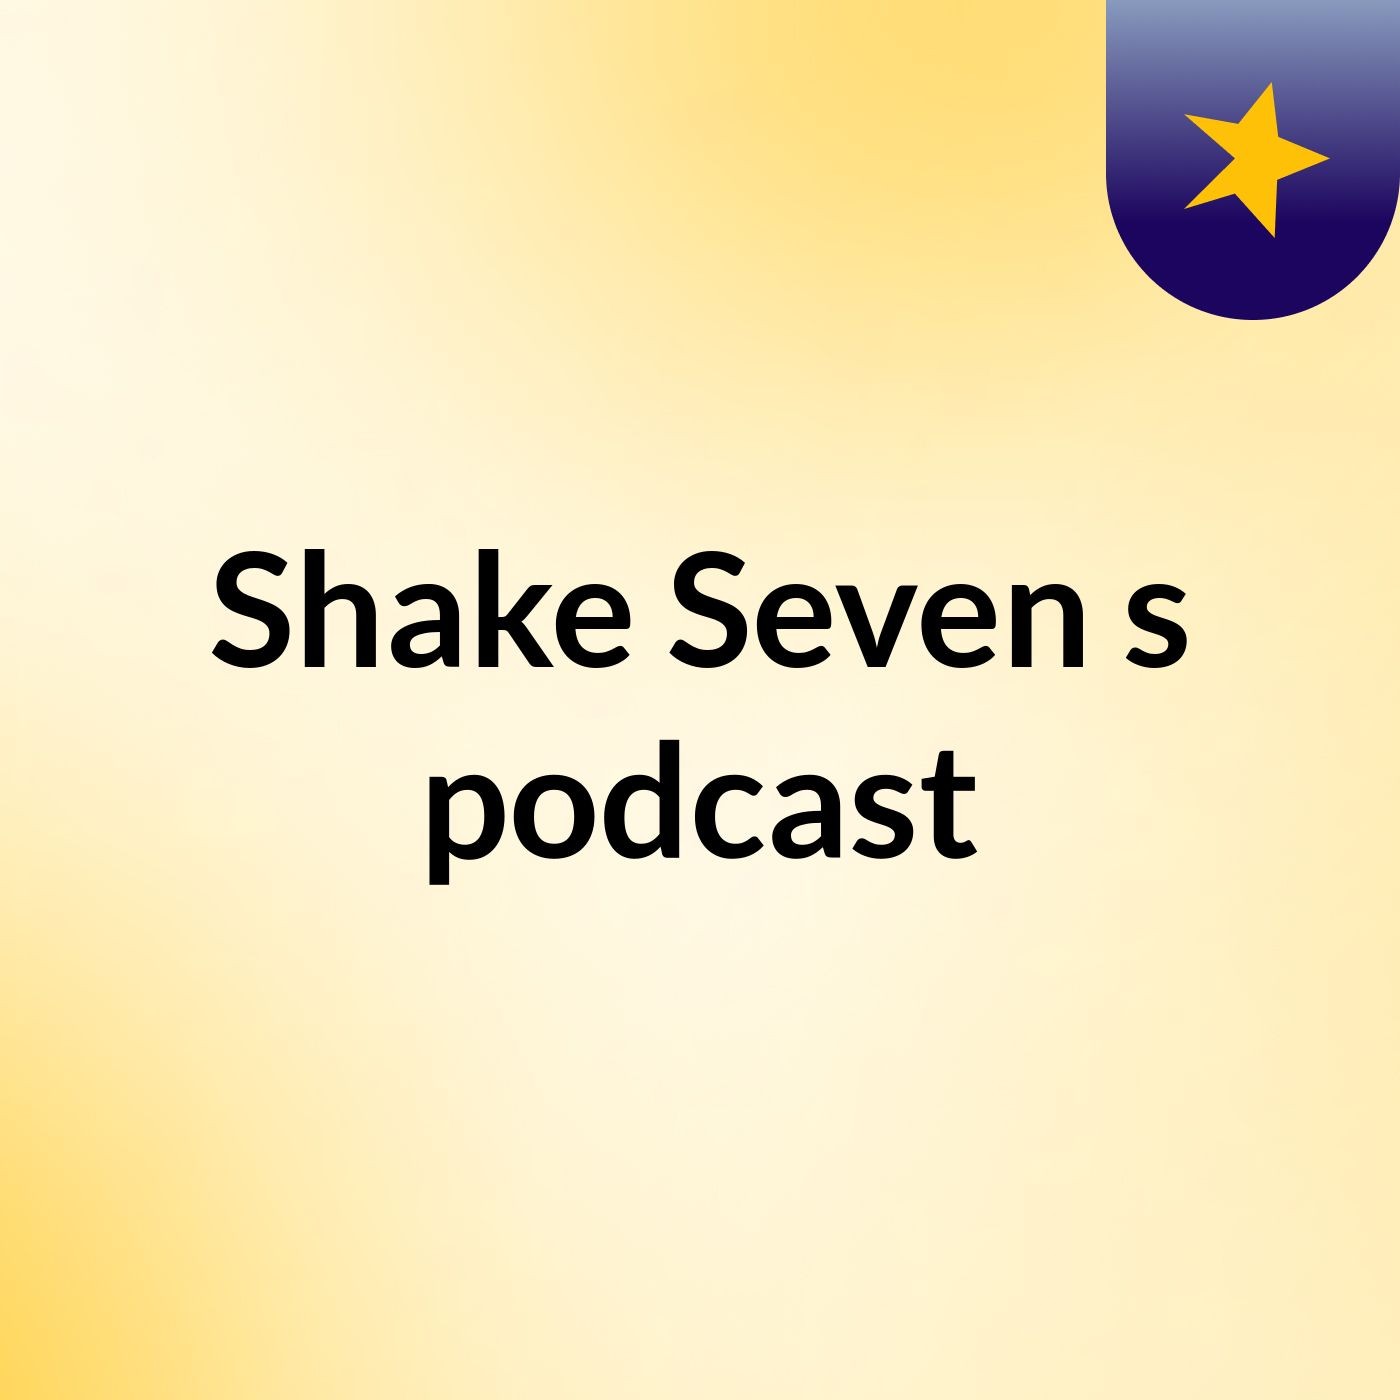 Episode 4 - Shake Seven's podcast